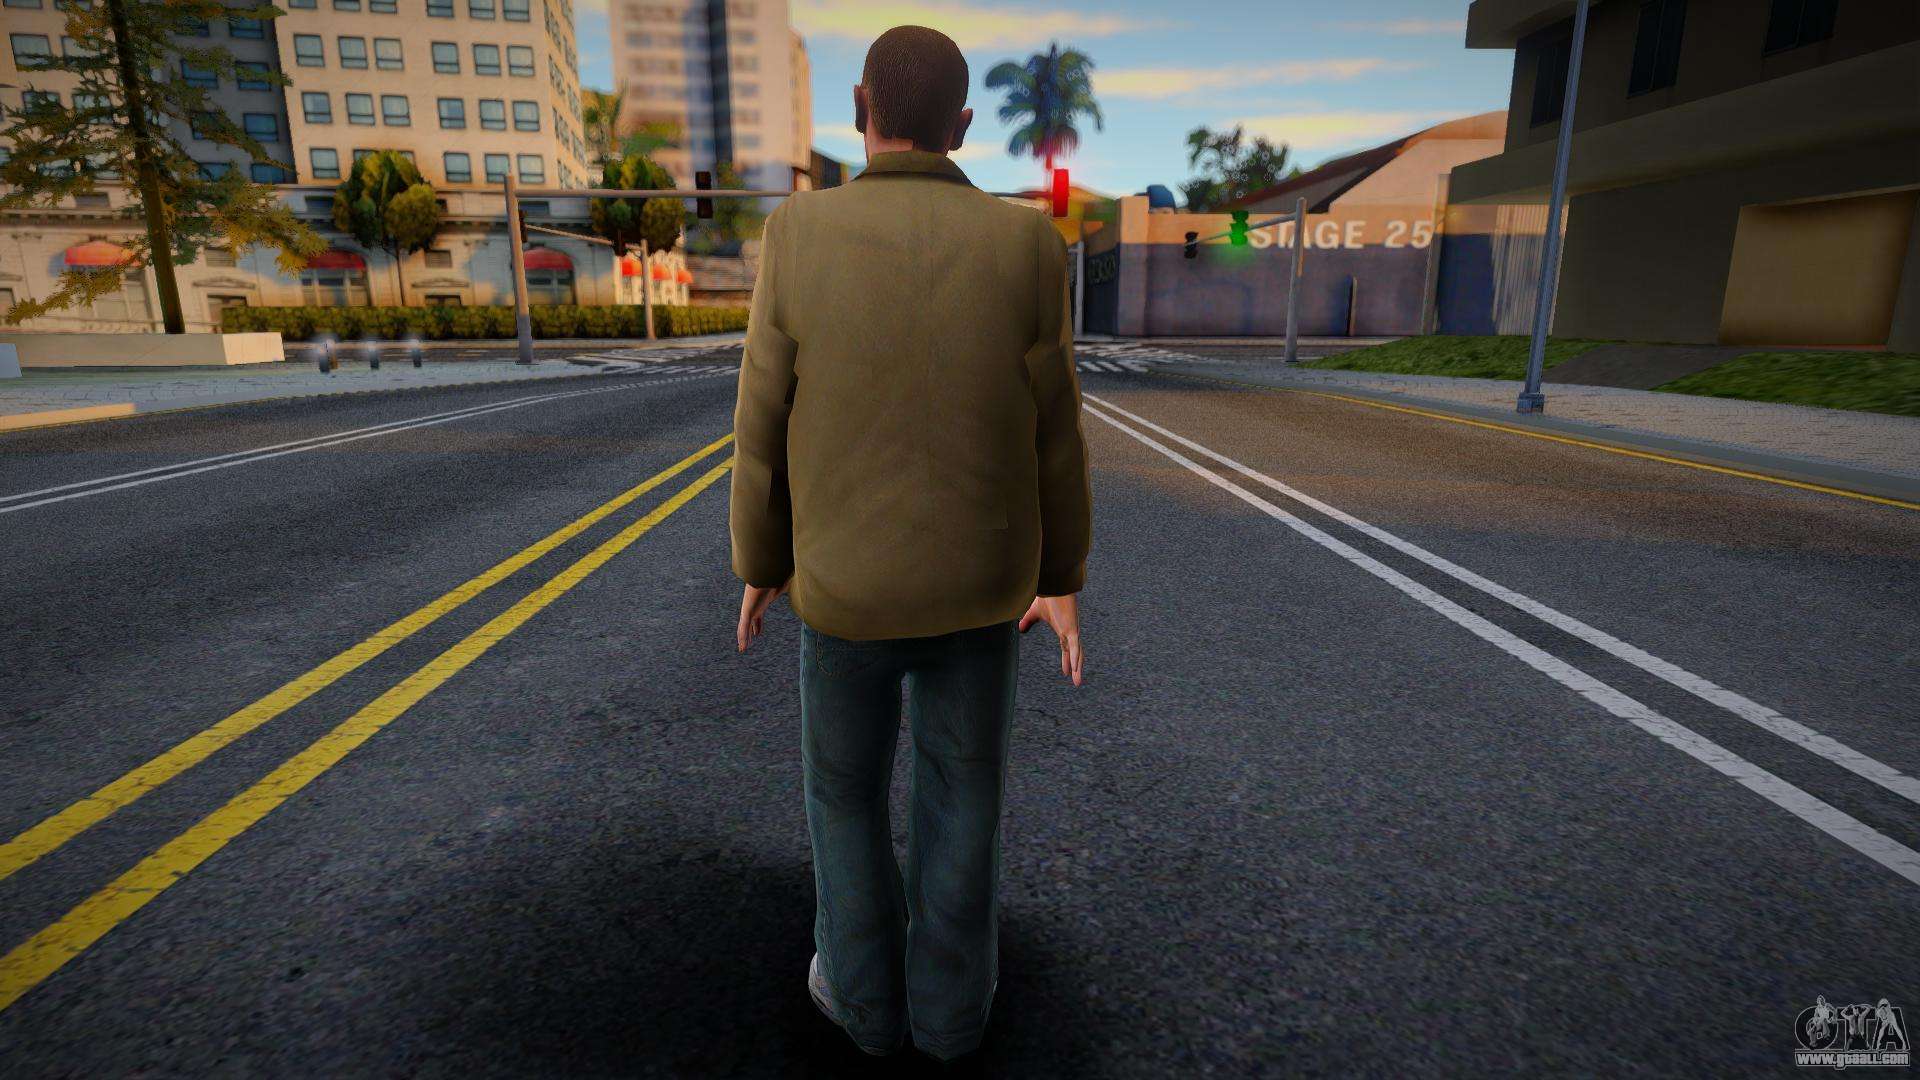 GTA Brasil Team - Desvendando o universo Grand Theft Auto: Skin do Niko  Bellic para o GTA 5